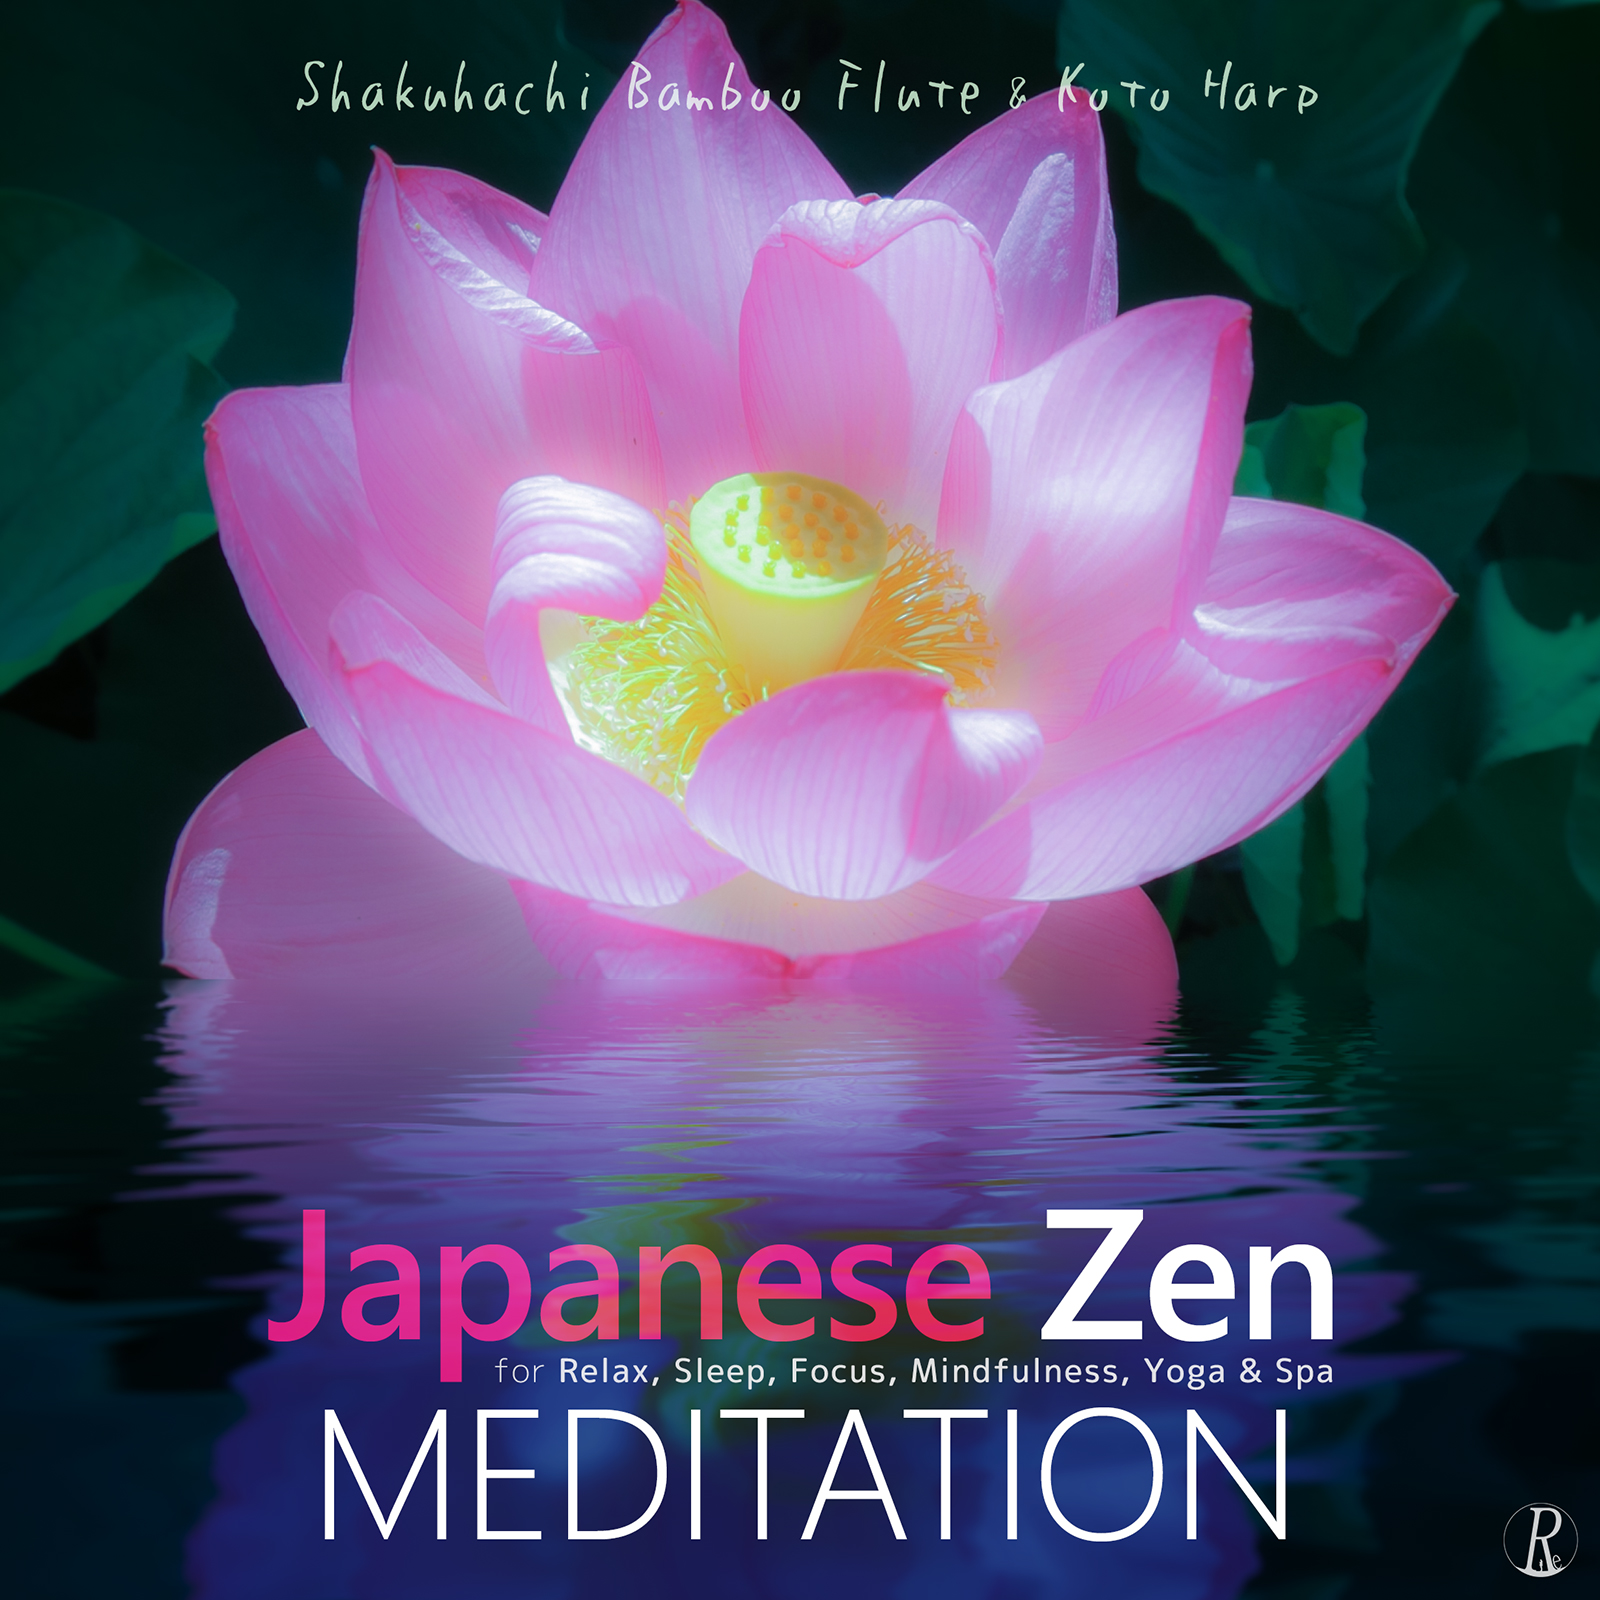 Japanese Zen Meditation – Shakuhachi Bamboo Flute & Koto Harp for Relax, Sleep, Focus, Mindfulness, Yoga & Spa